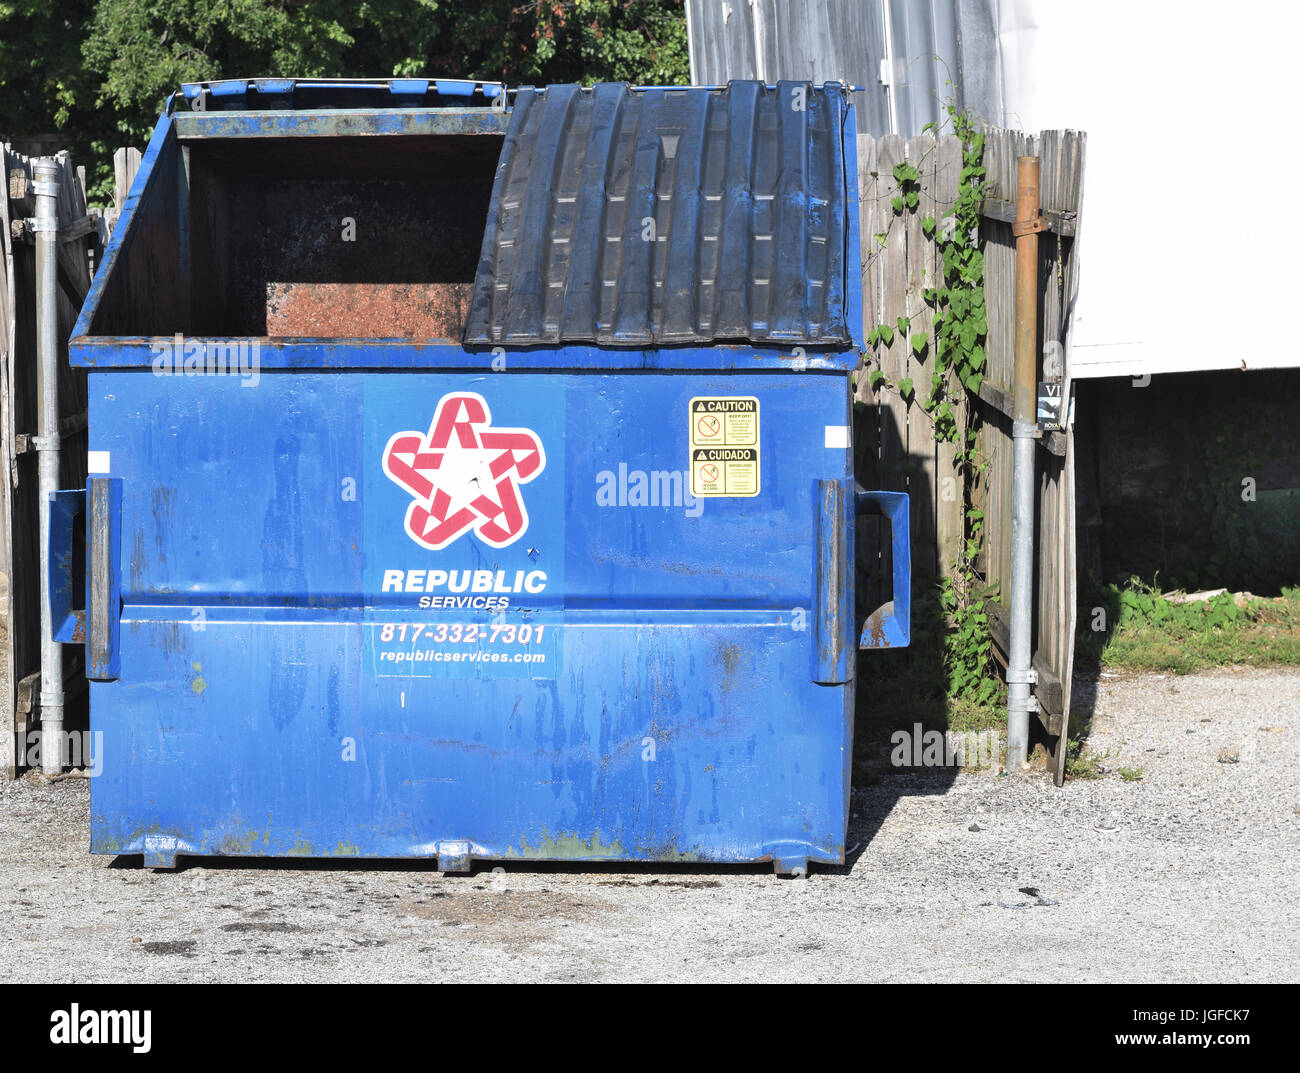 República Servicios Papelera papelera azul dumpsters Foto de stock